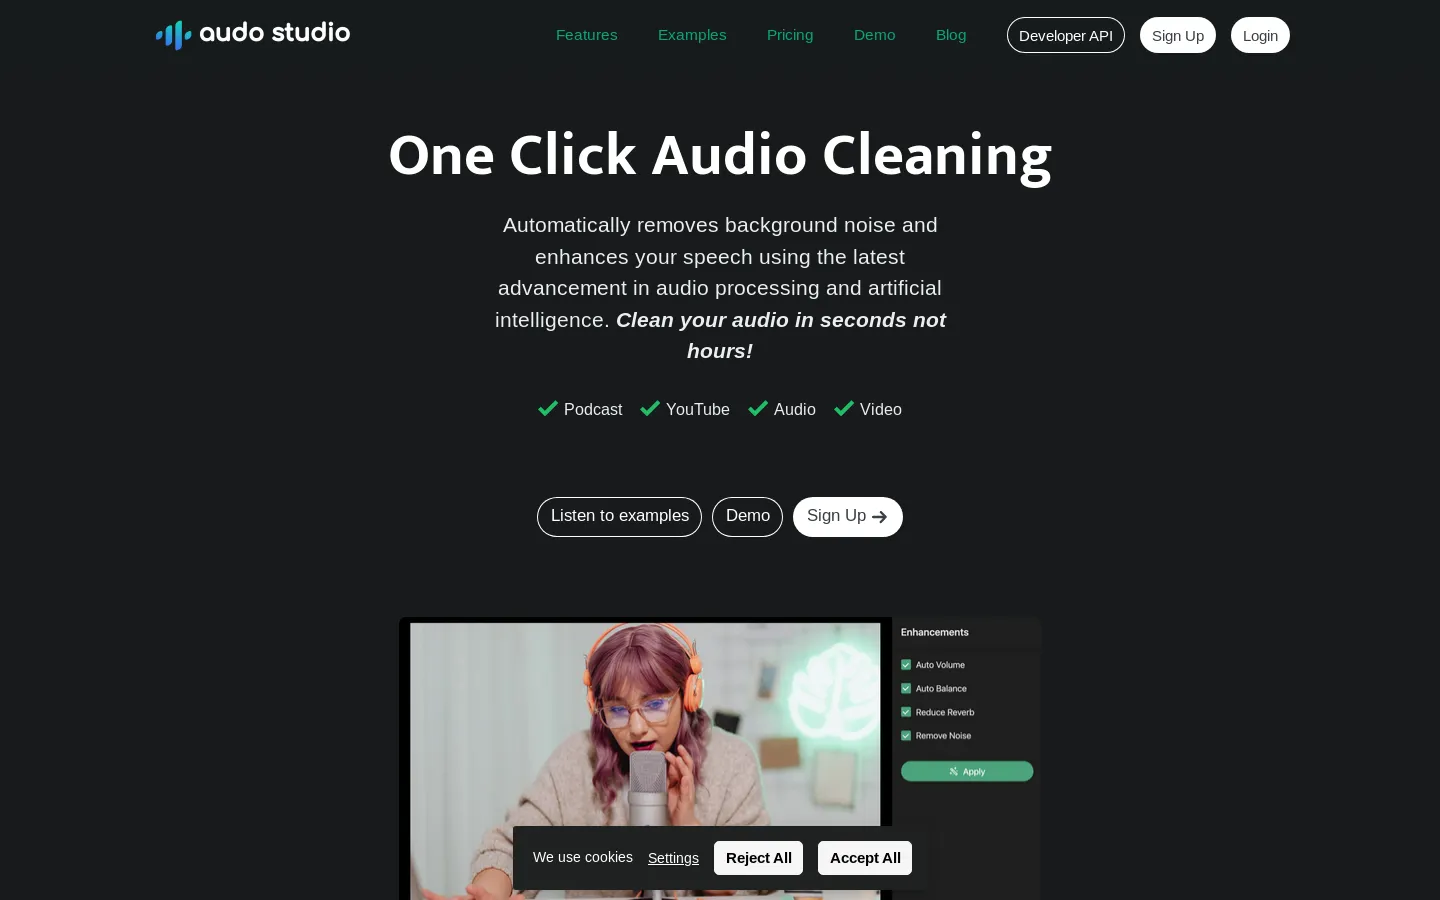 Audo Studio | One Click Audio Cleaning